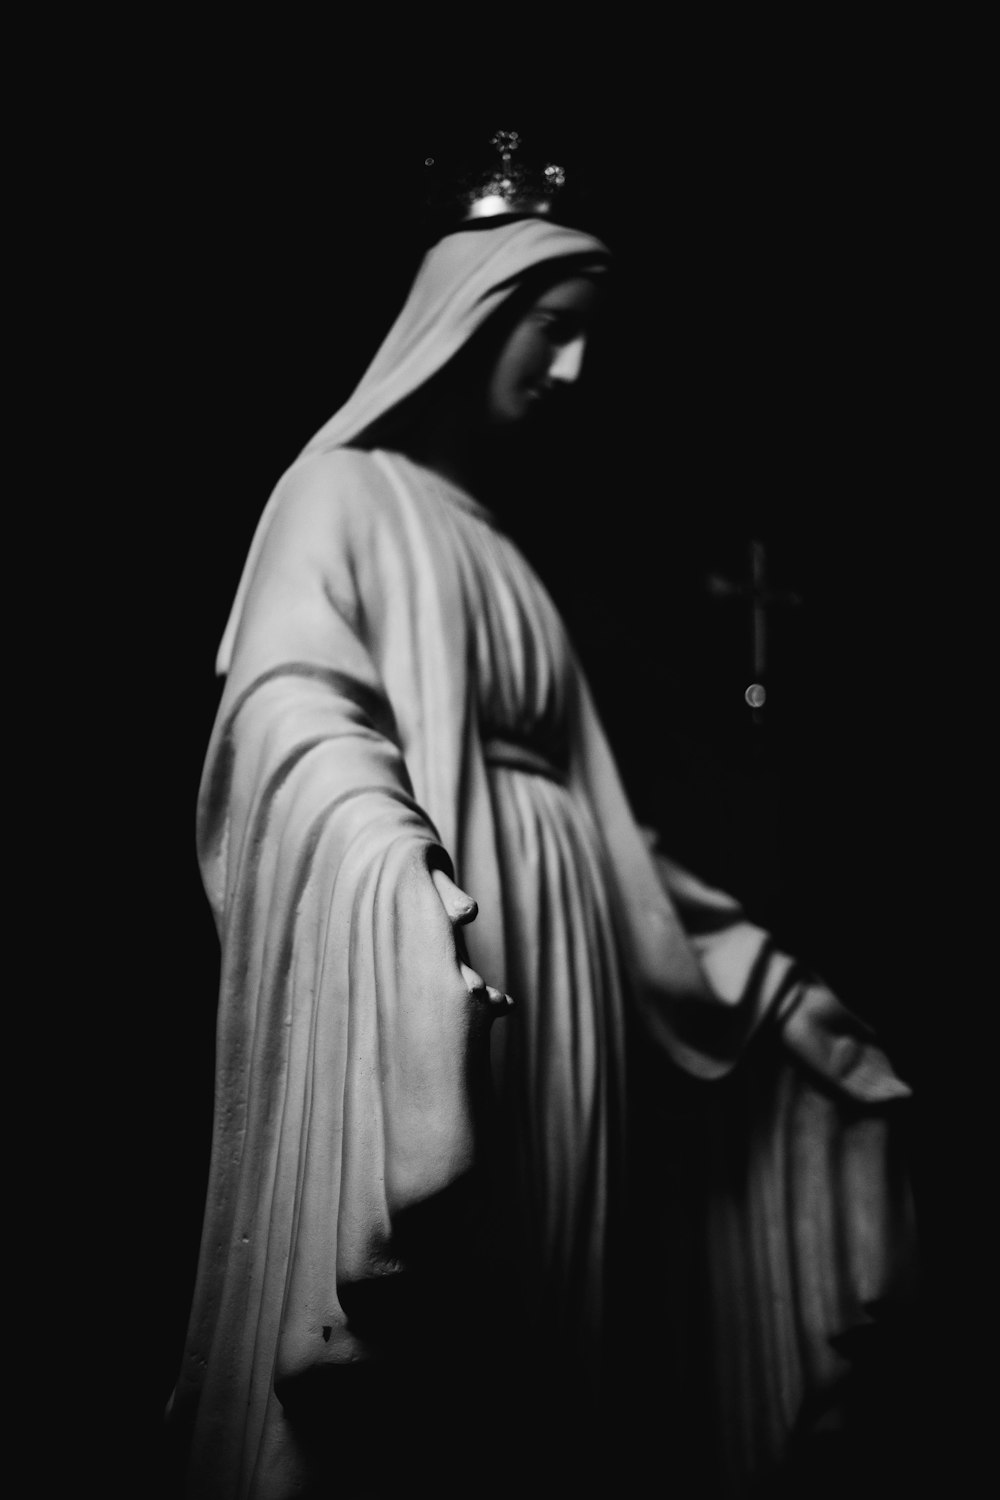 Virgin mary statue photo – Free Grey Image on Unsplash